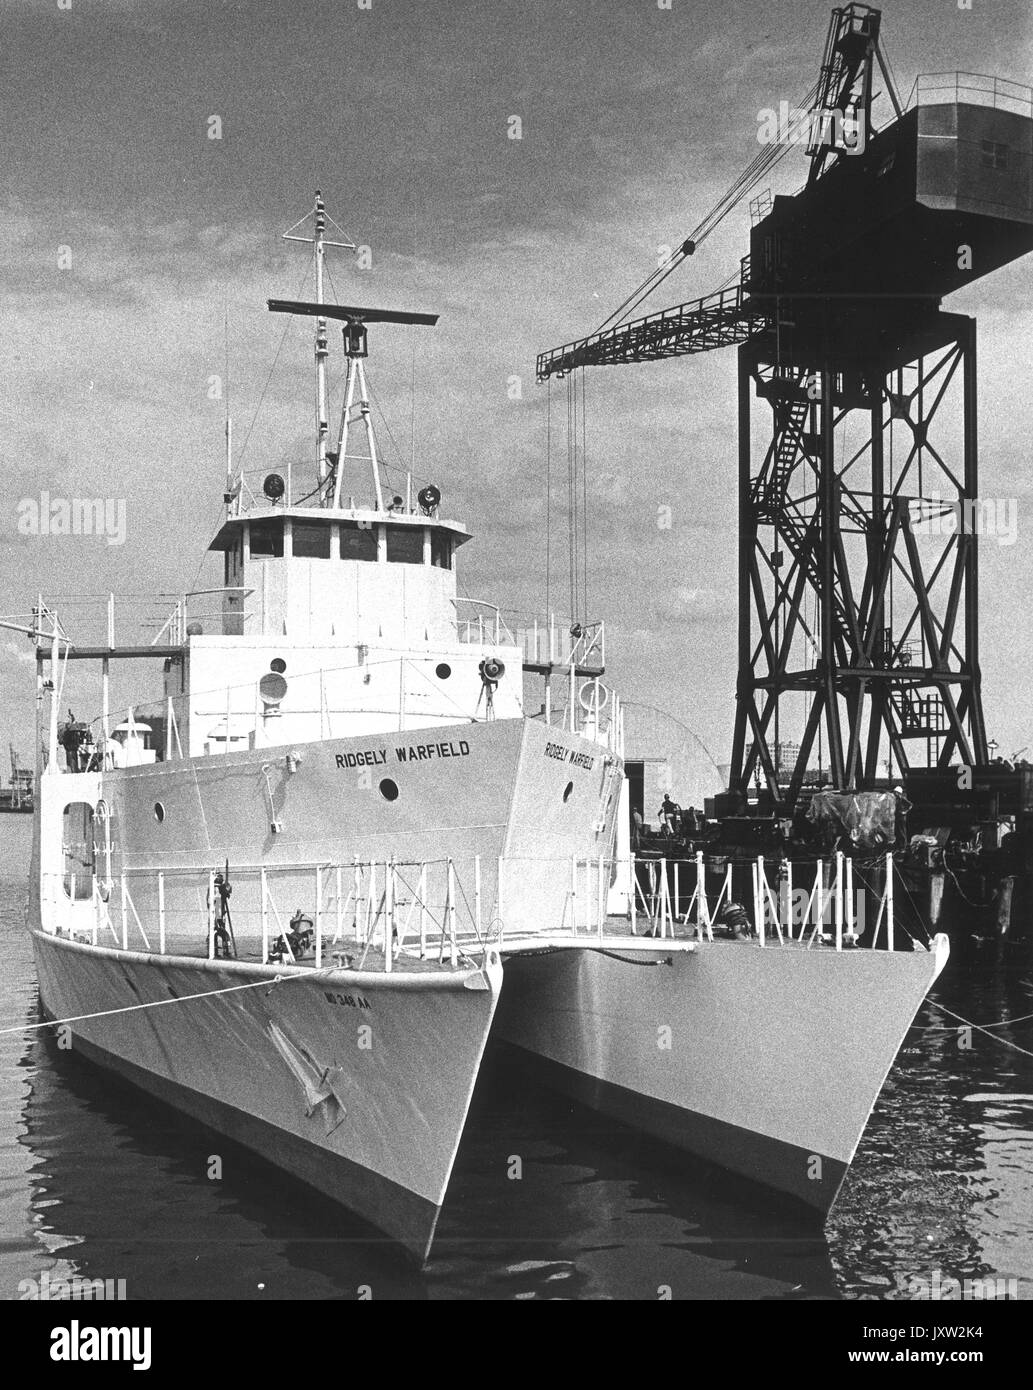 Chesapeake Bay Institute, Ridgely Warfield [Research Vessel] Ridgely Warfield docked beside large crane, 1980. Stock Photo